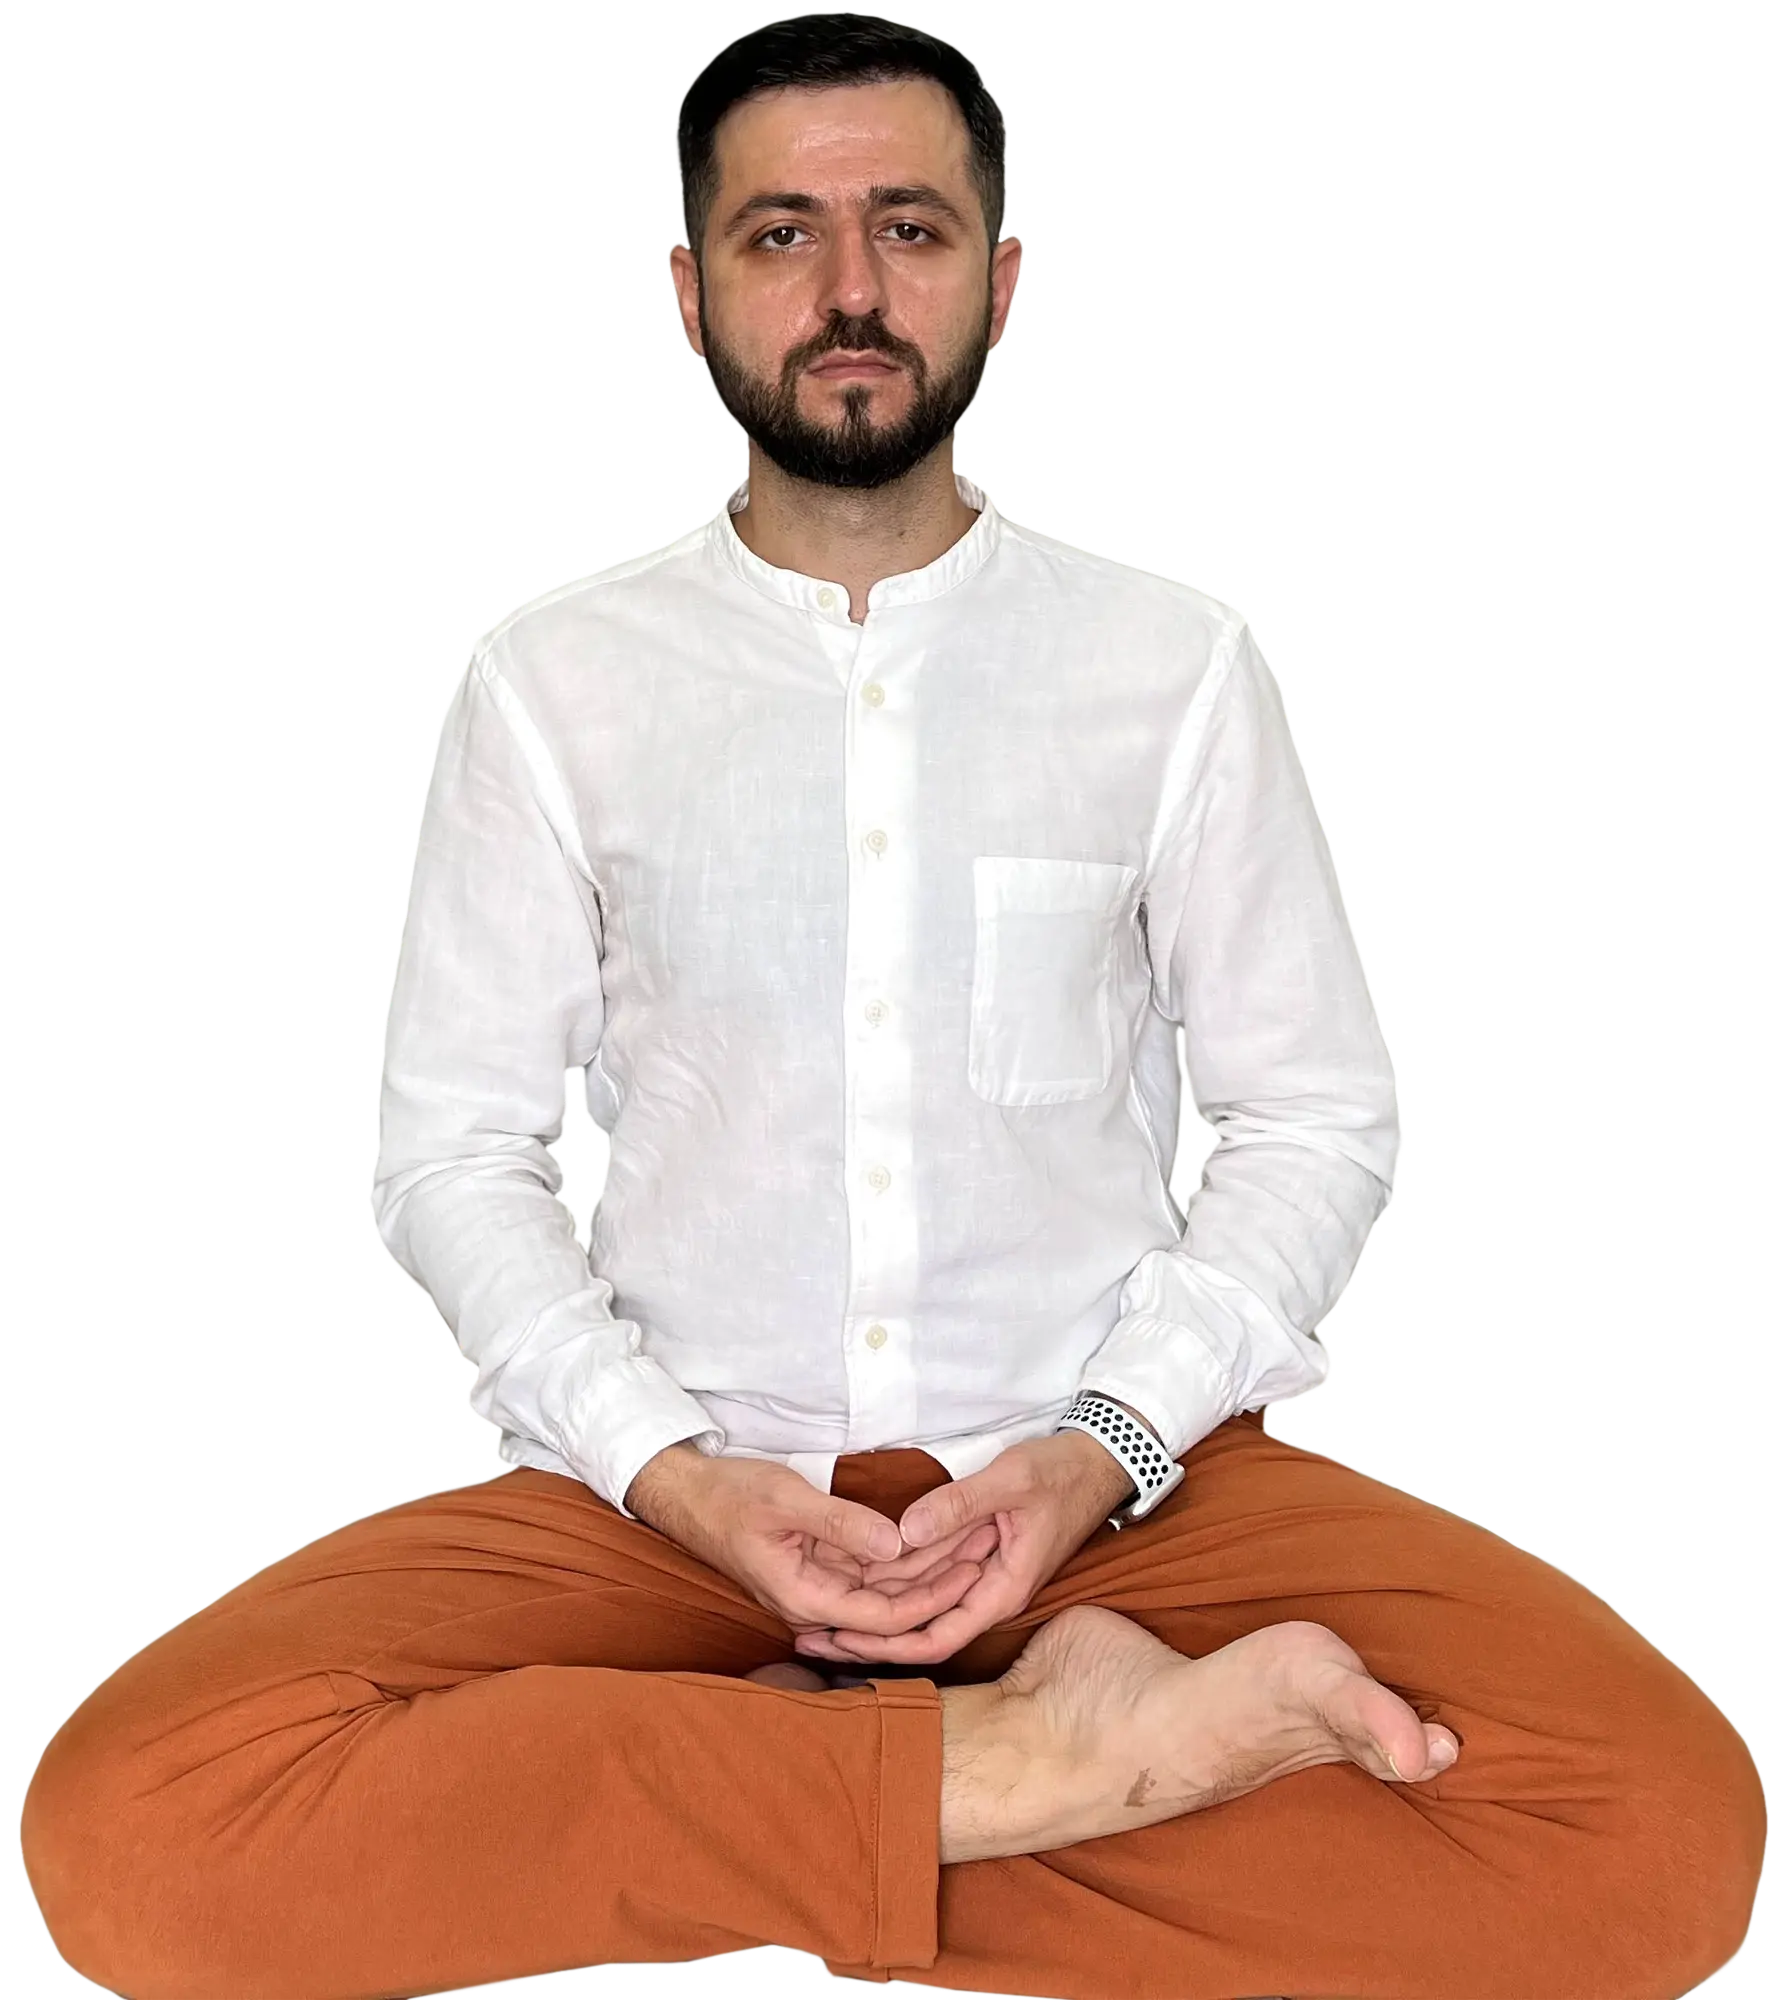 фото Дмитрия Агароняна в позе медитации